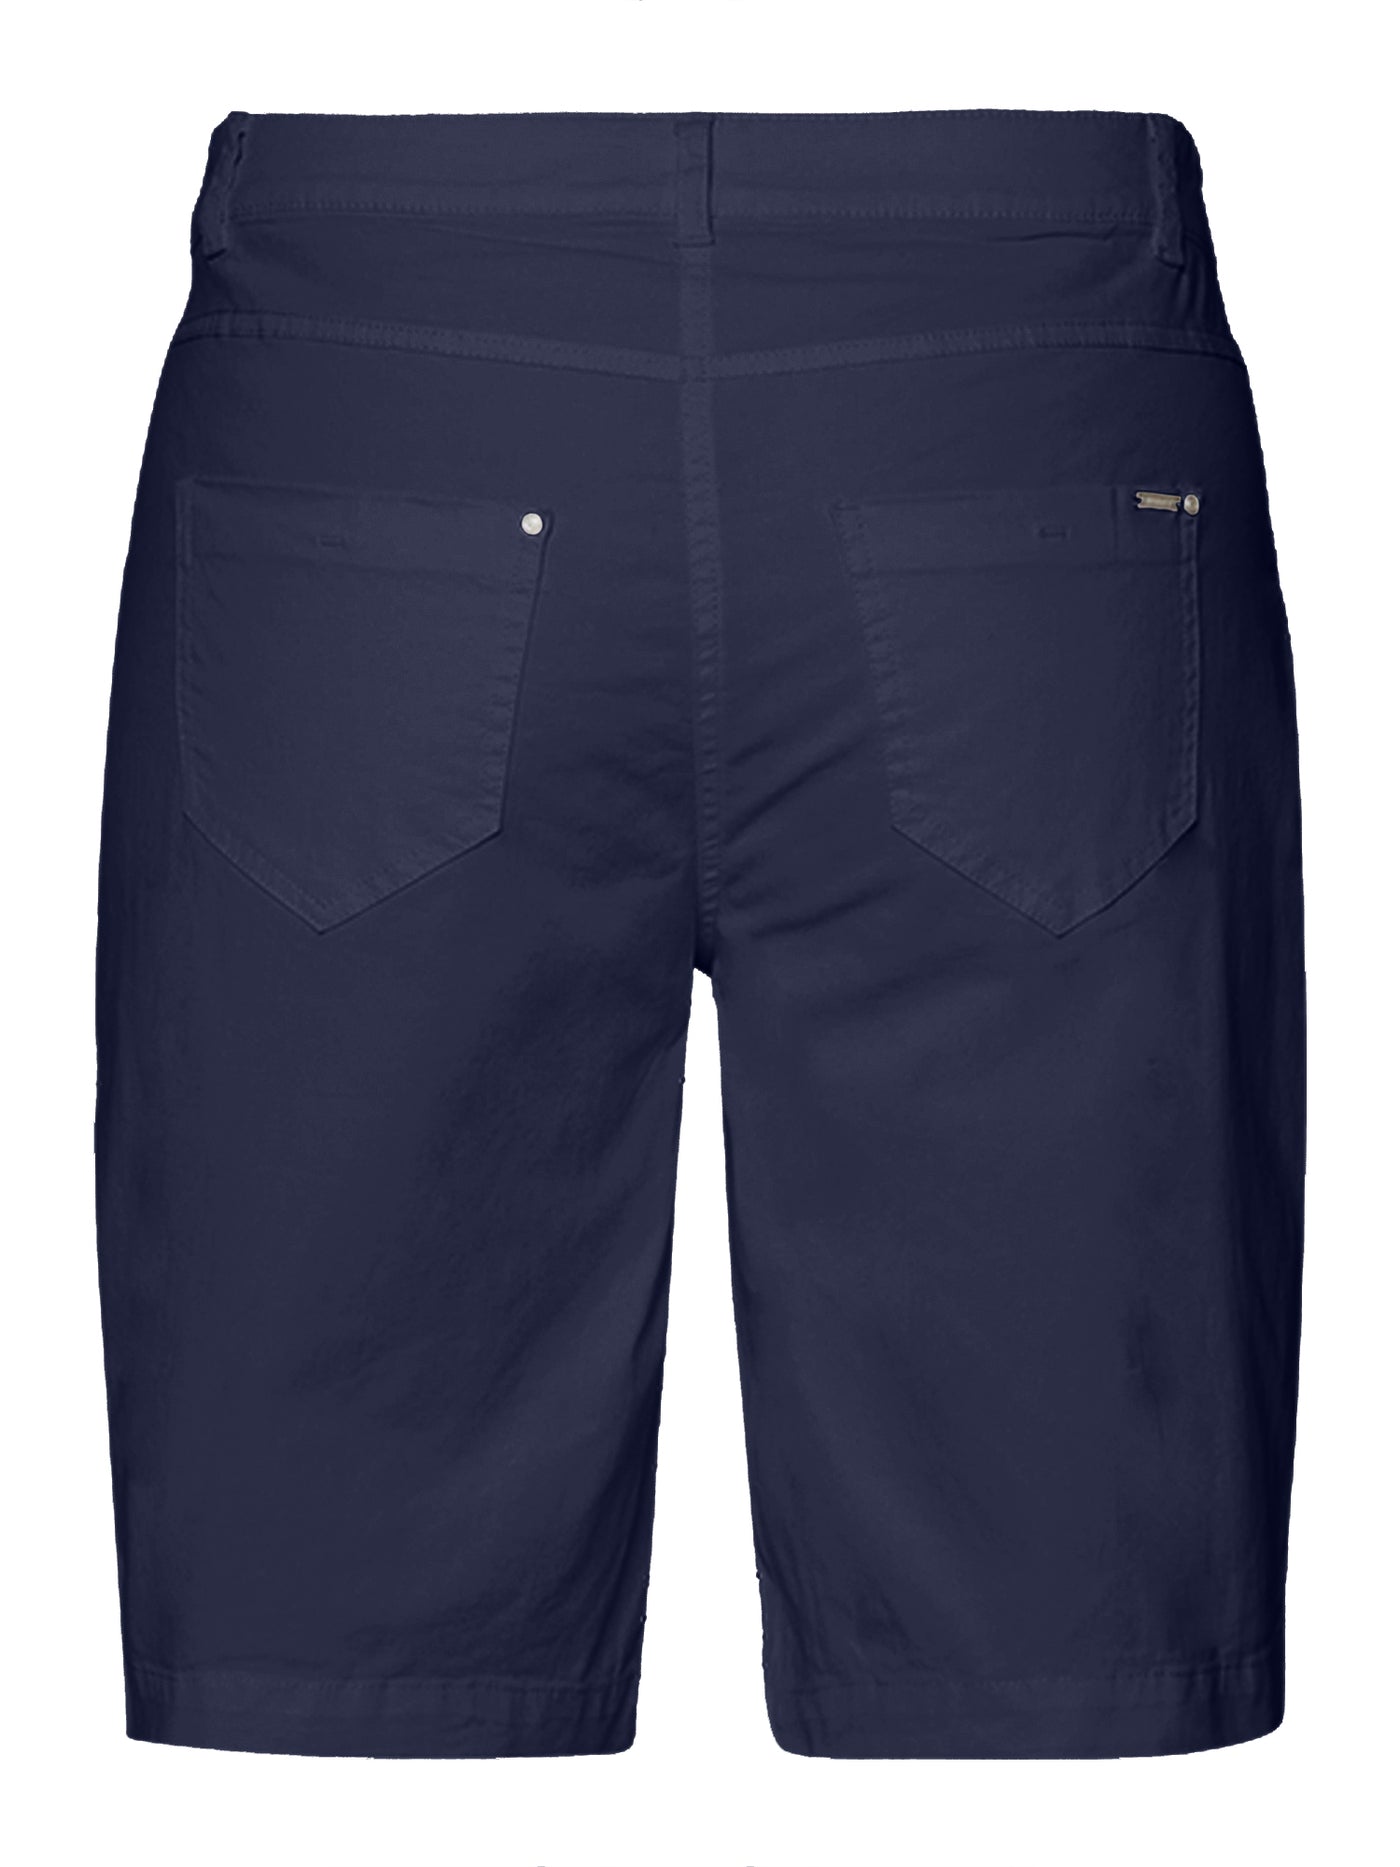 Shorts - Navy Blue